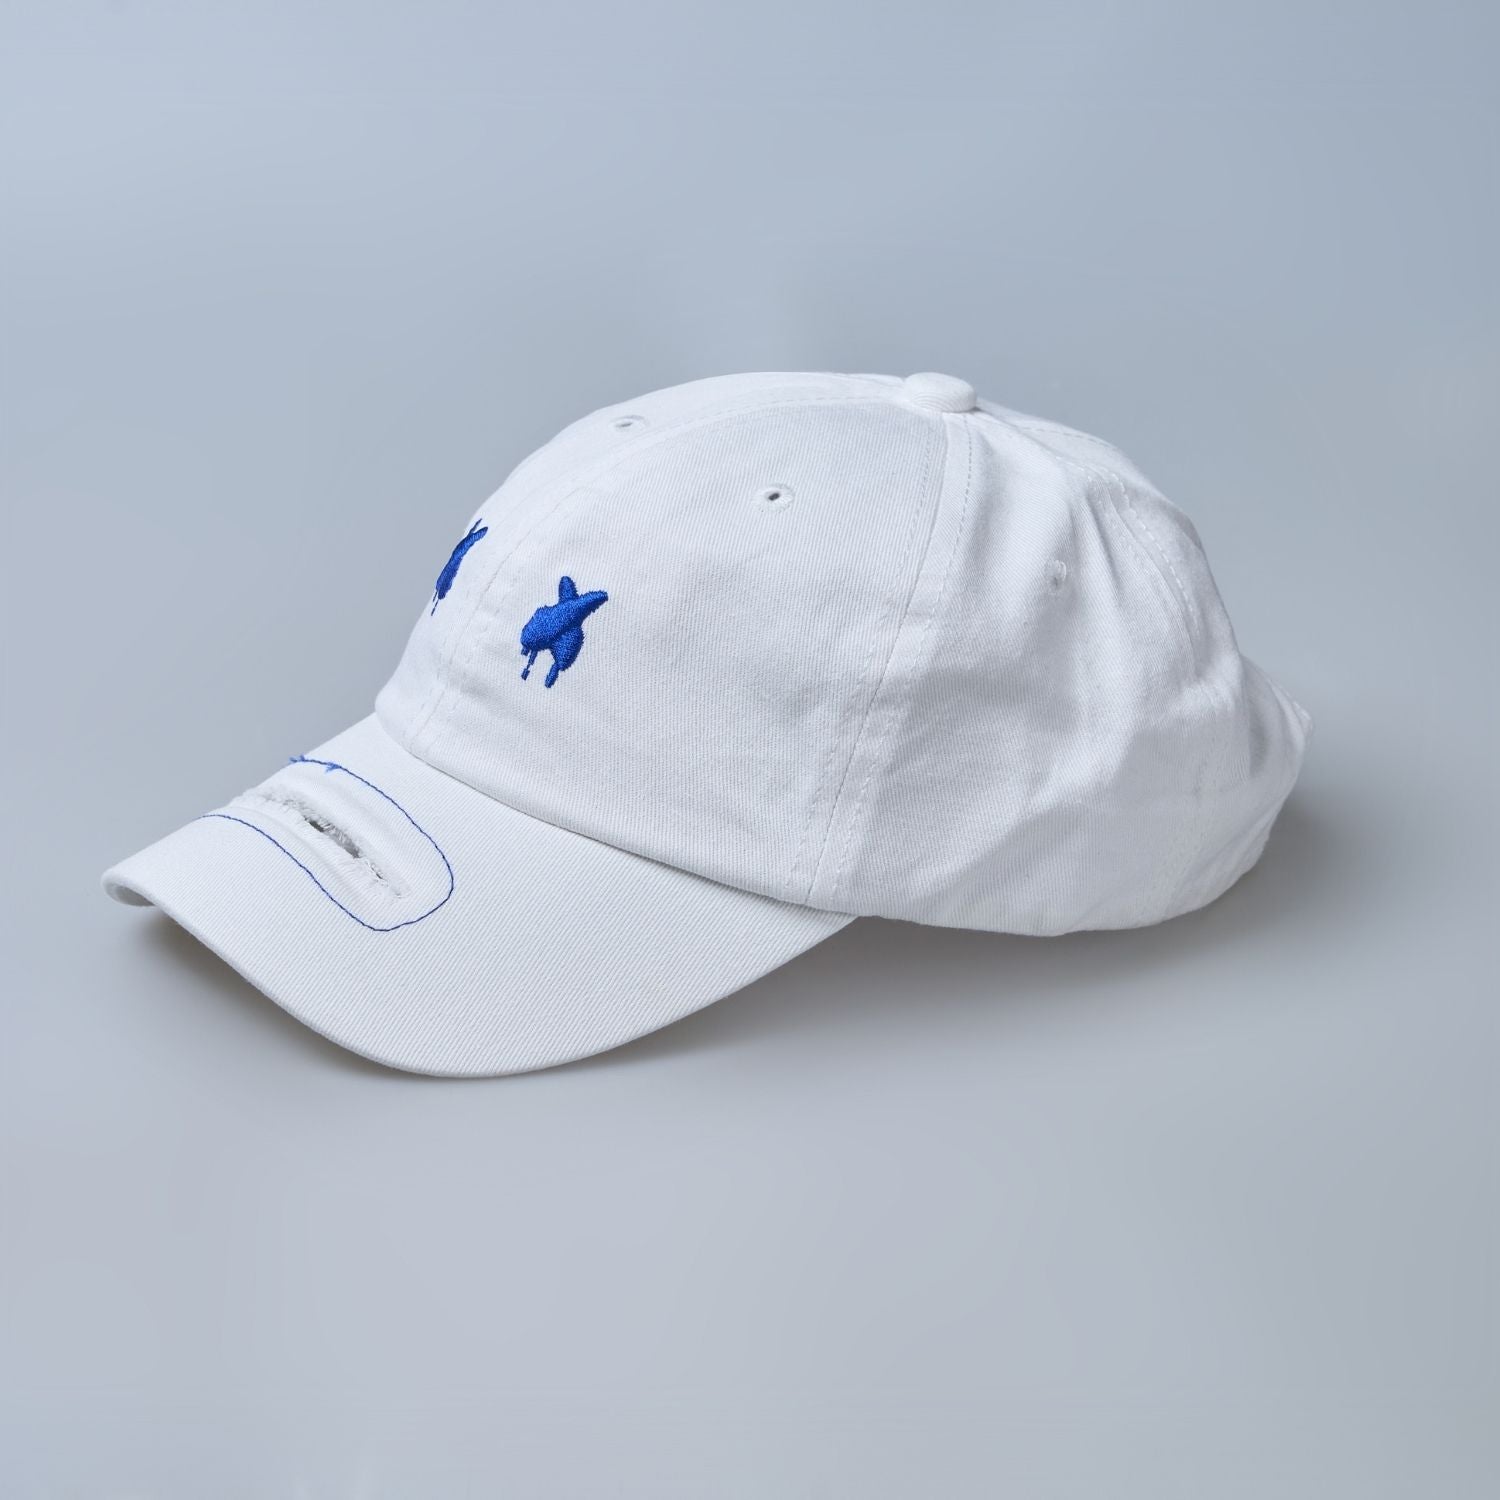 white colored, wide brim cap for men with adjustable strap, design details.